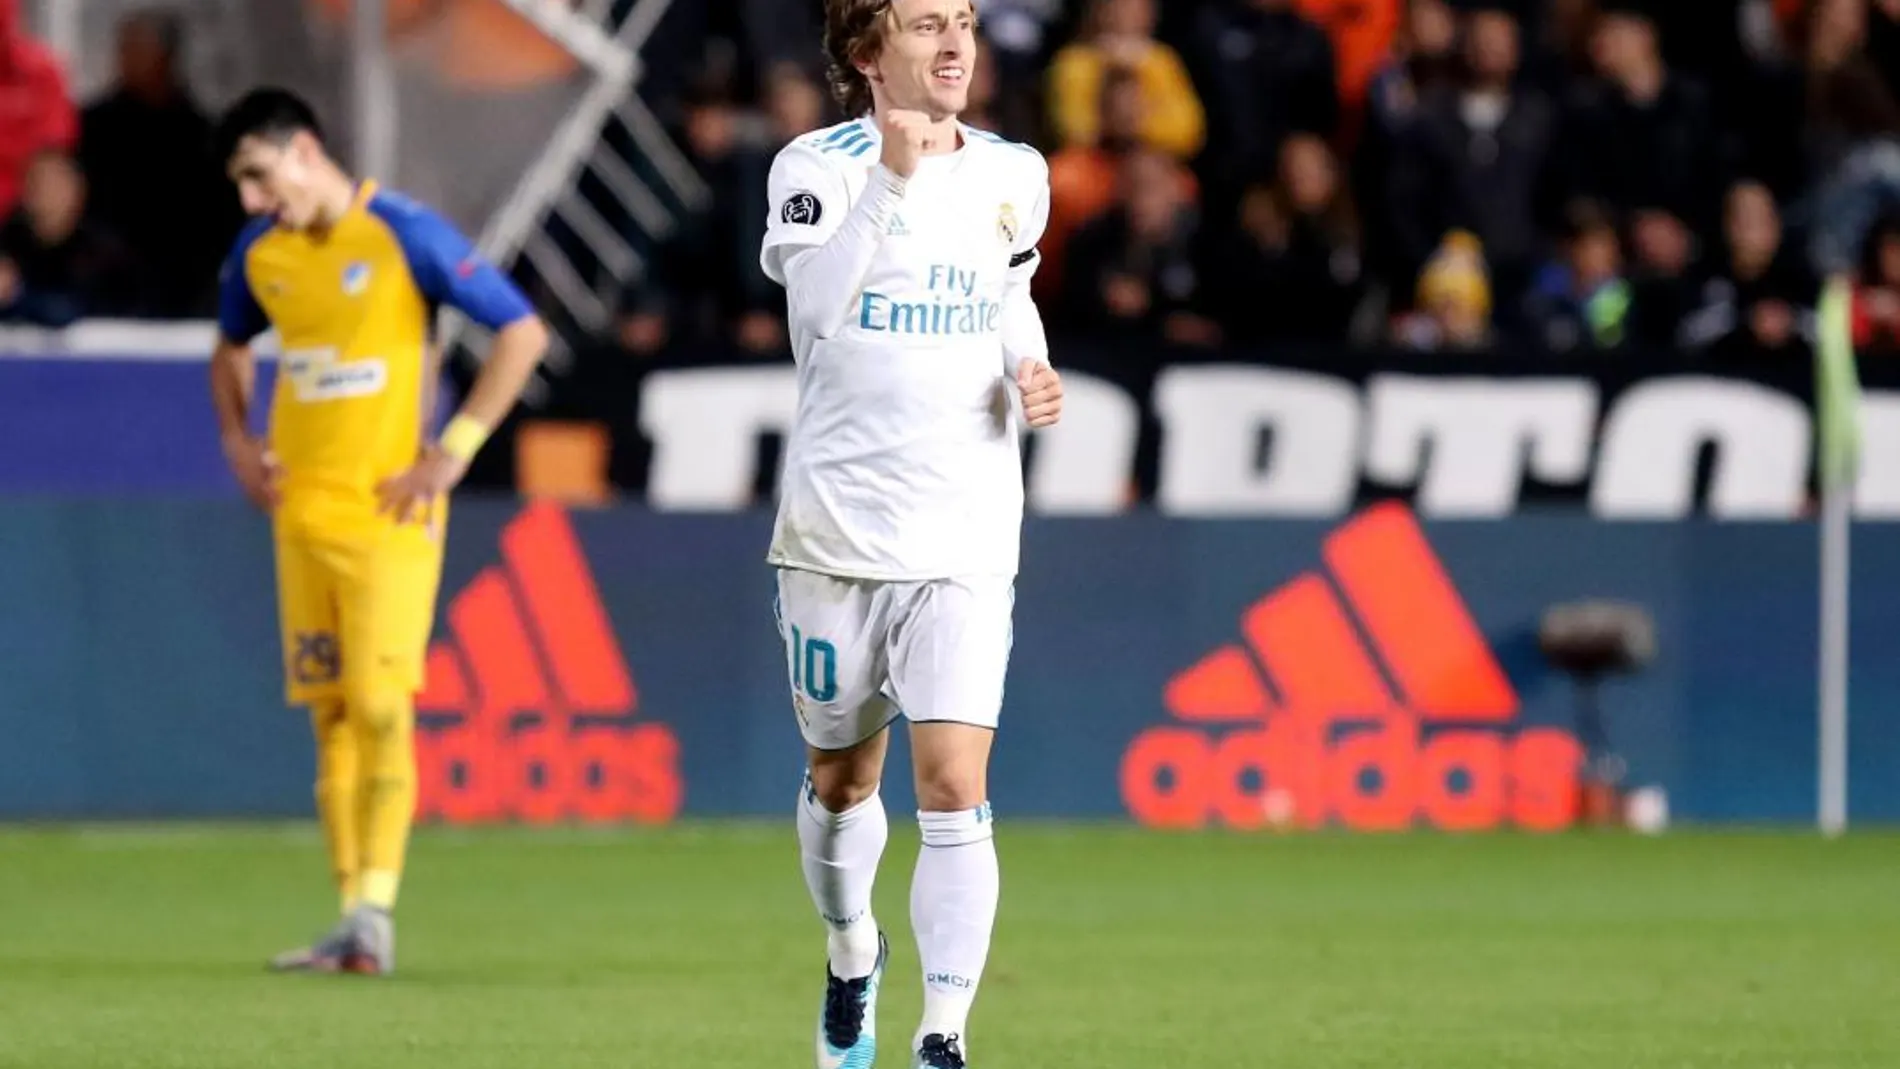 El jugador del Real Madrid Luka Modric celebra un gol esta temporada